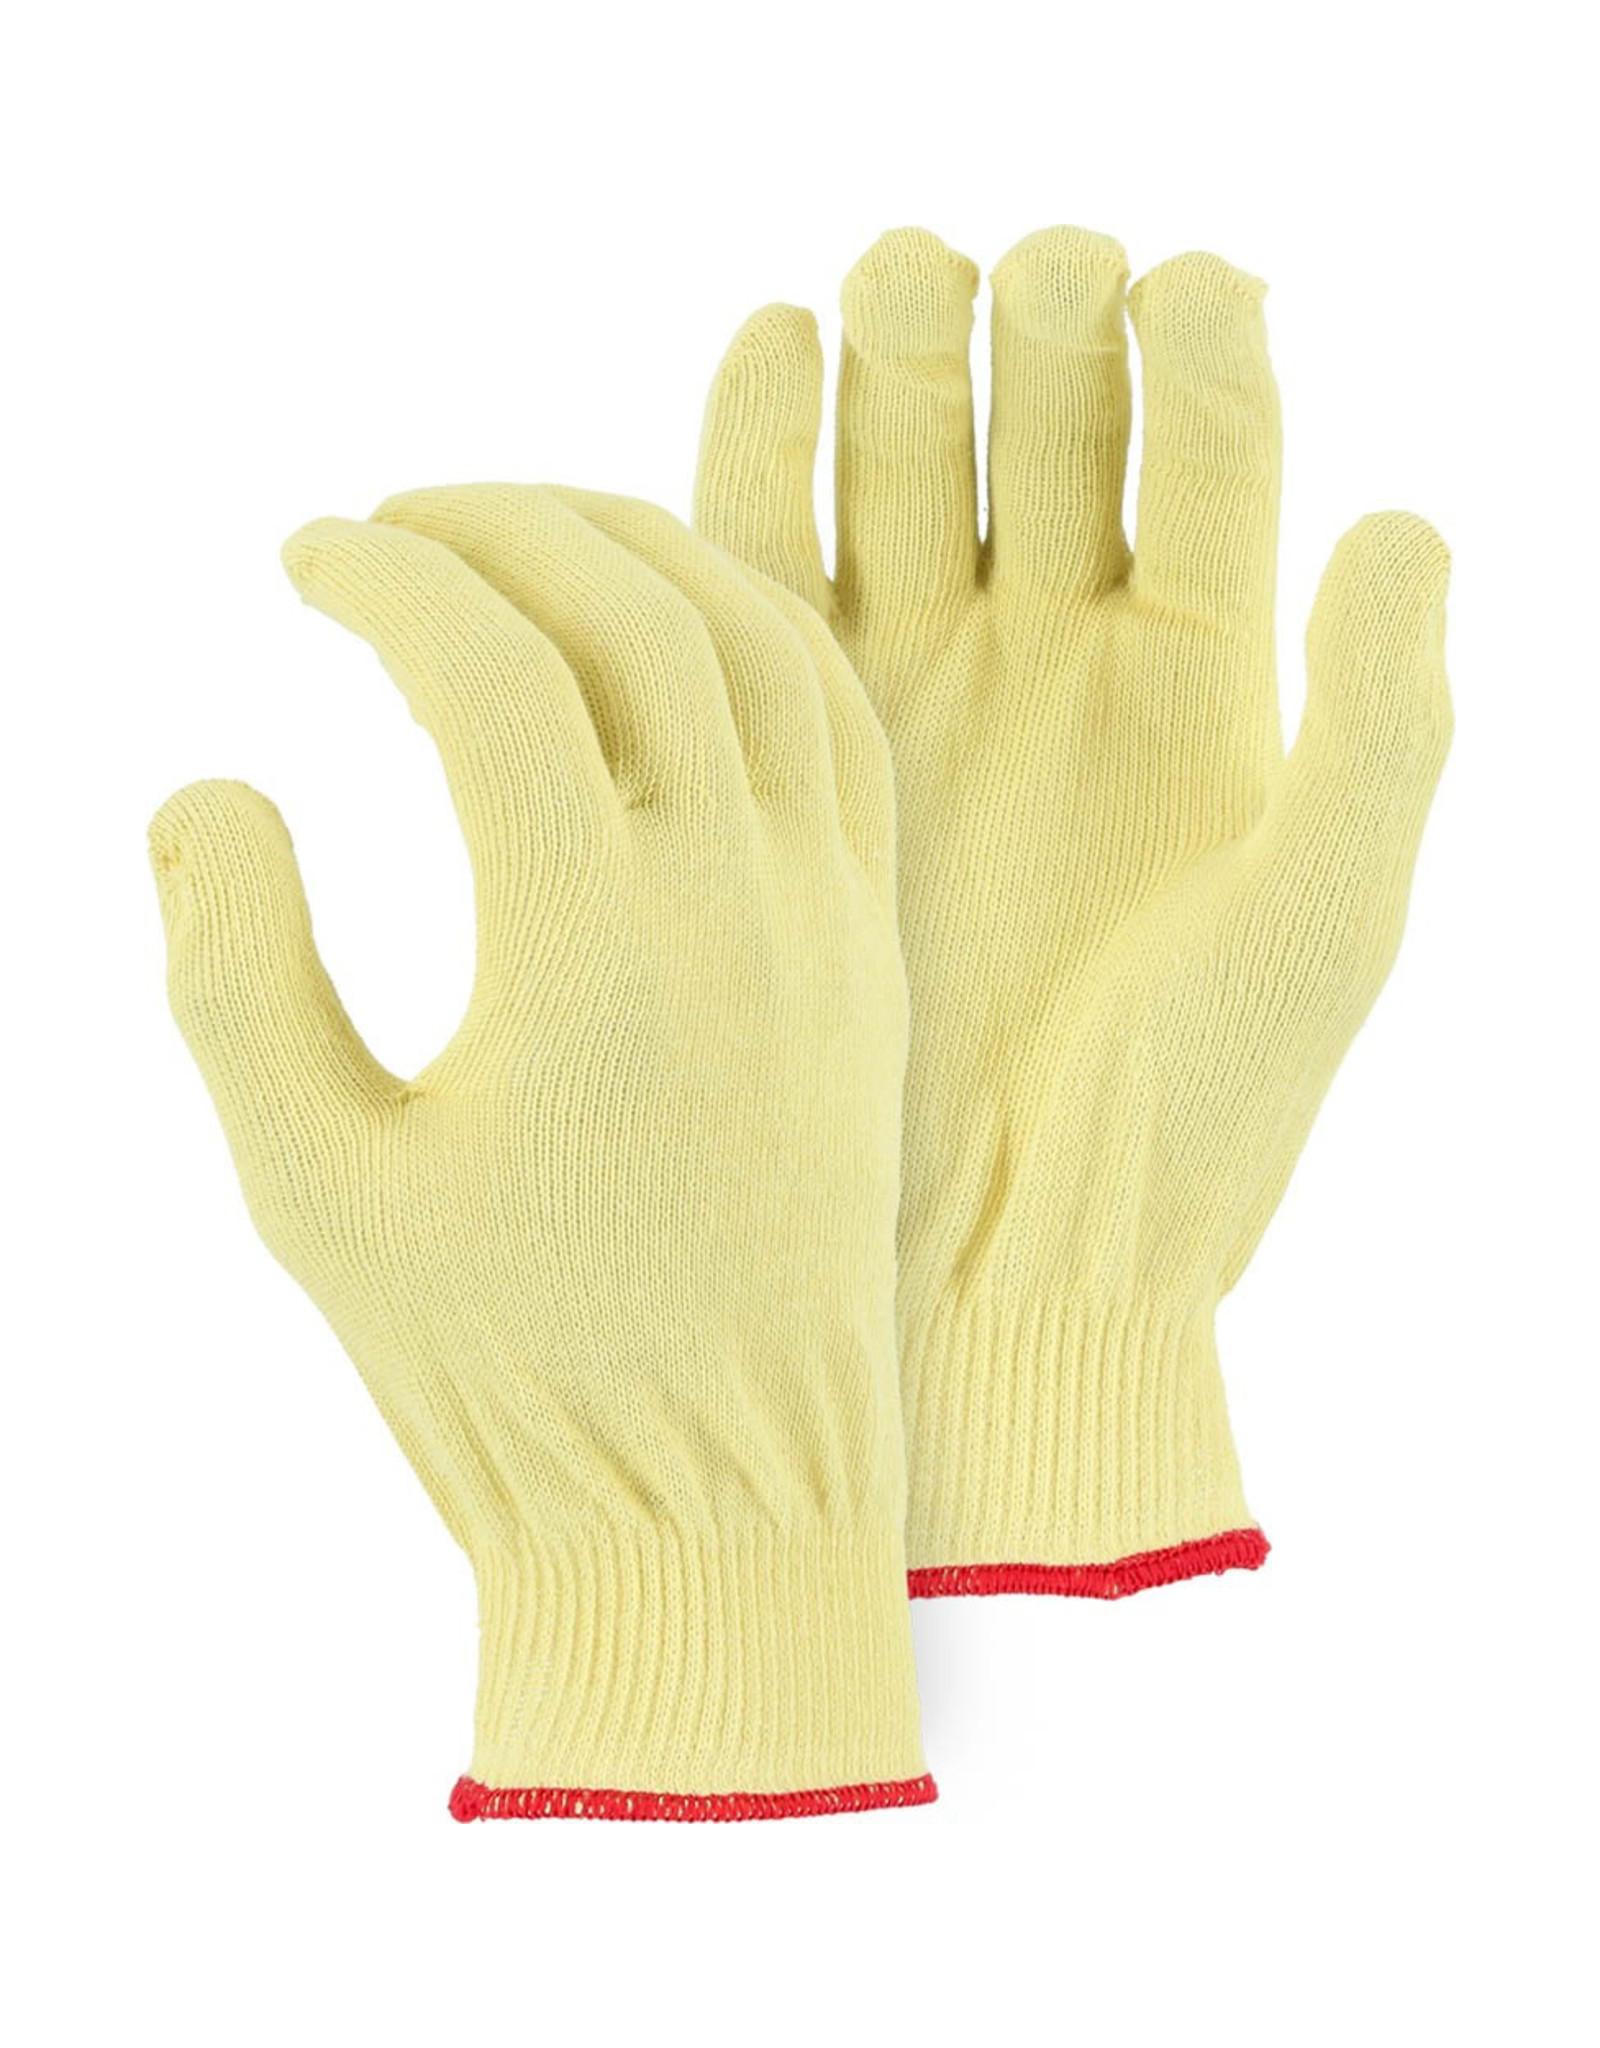 Majestic Glove Cut-Less With Kevlar® Lightweight 13-Gauge Cut Resistant Seamless Knit Glove